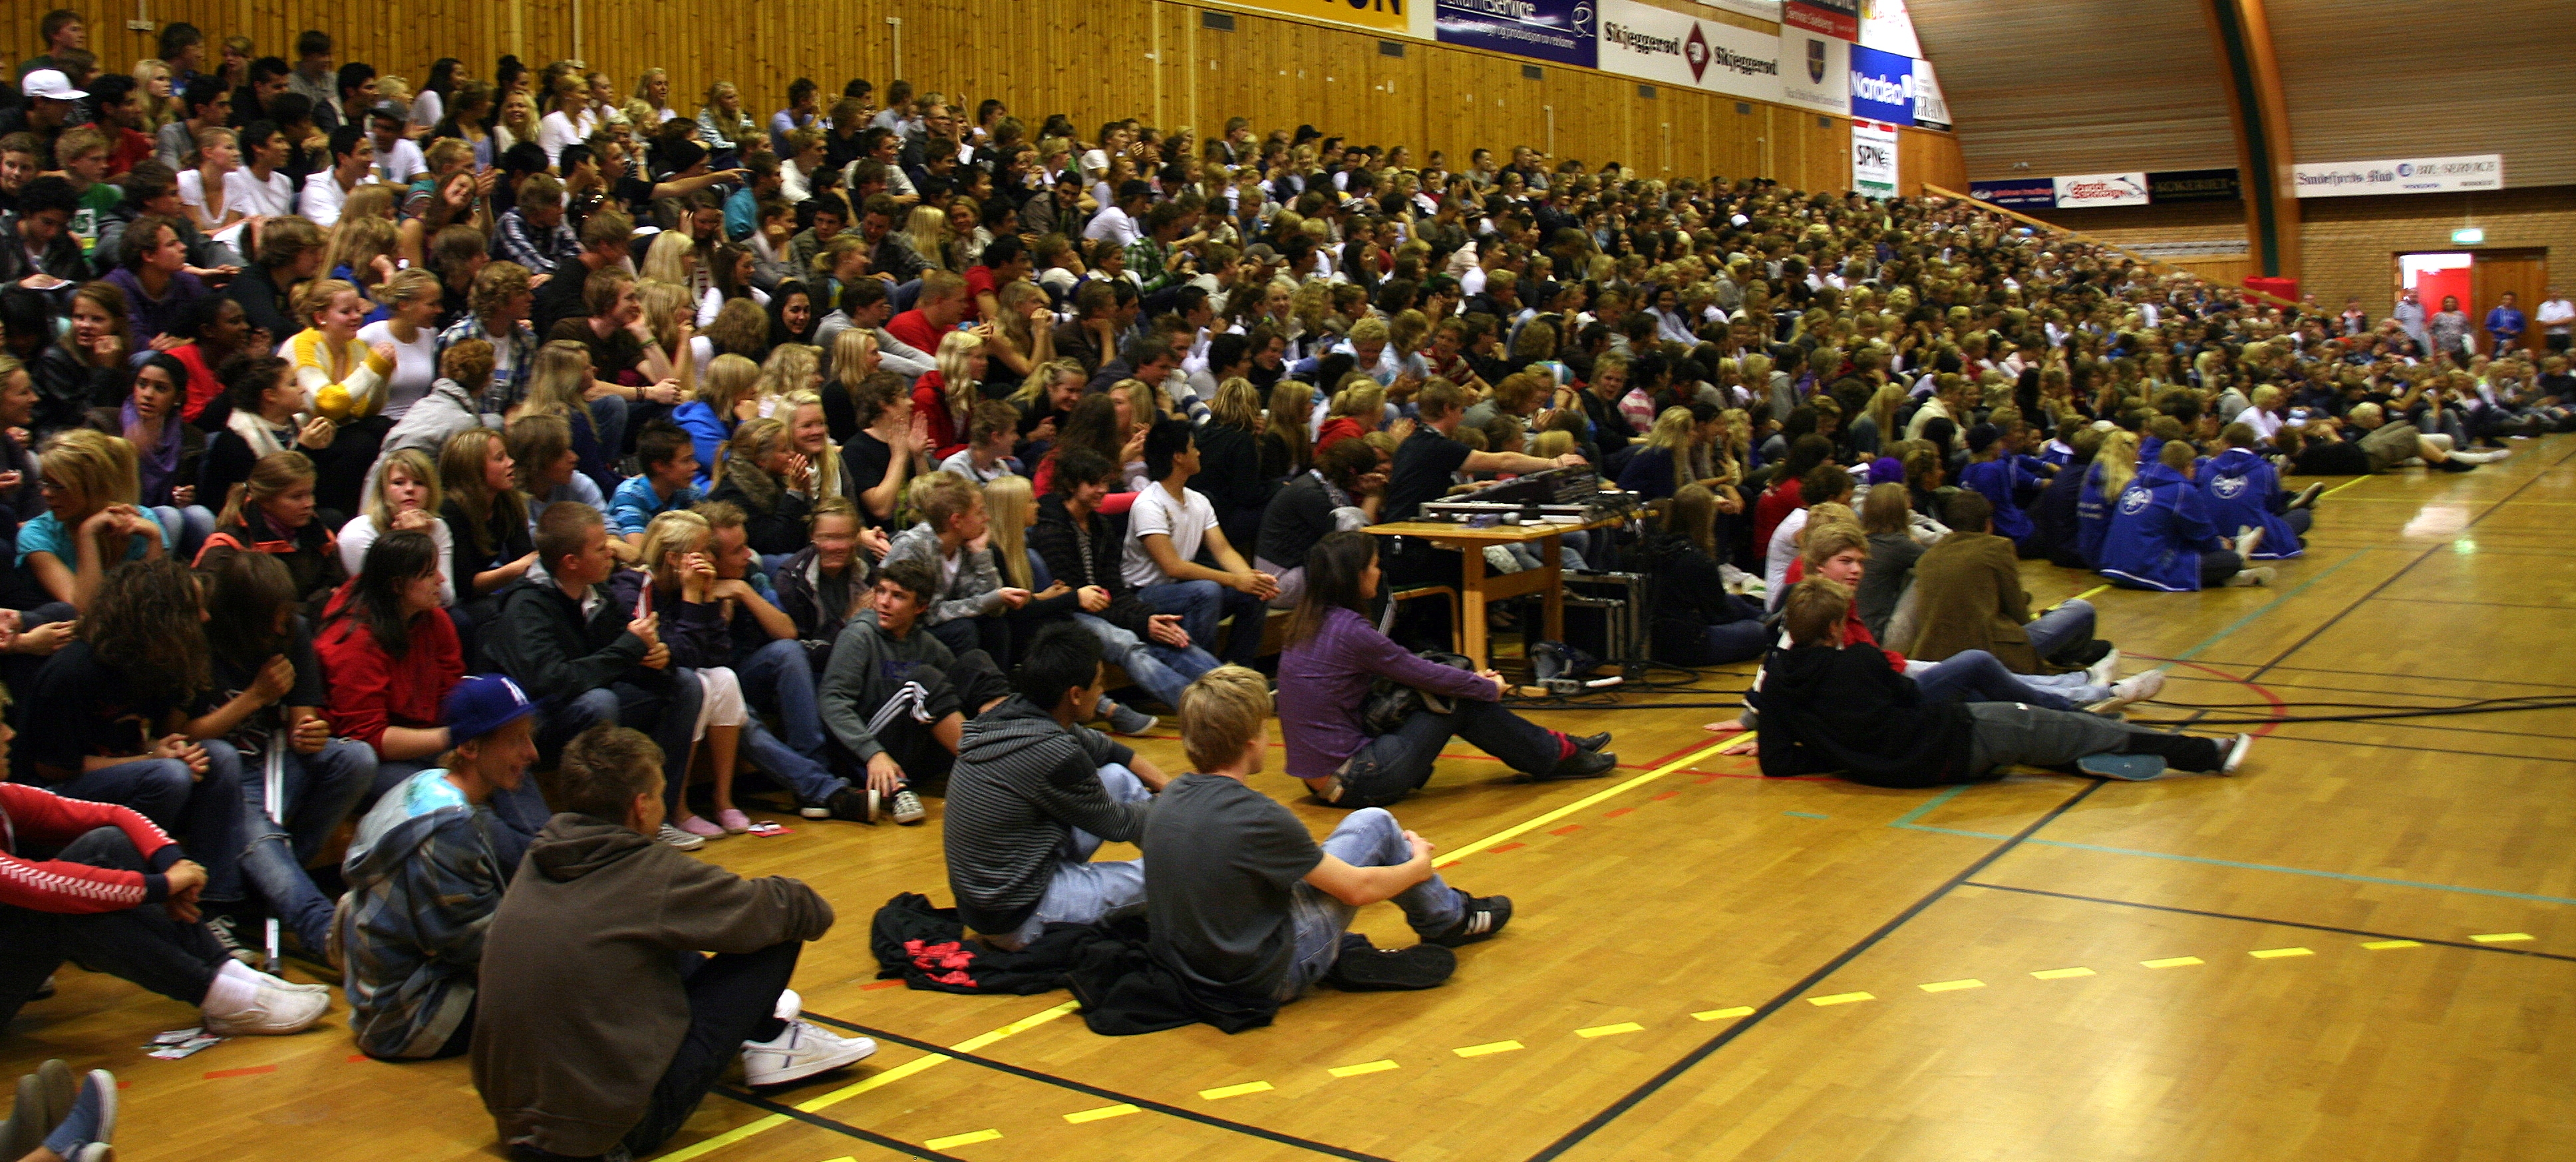 Skoledebatt ved Sandefjord videregående skole (foto: Sverre Lilleeng)